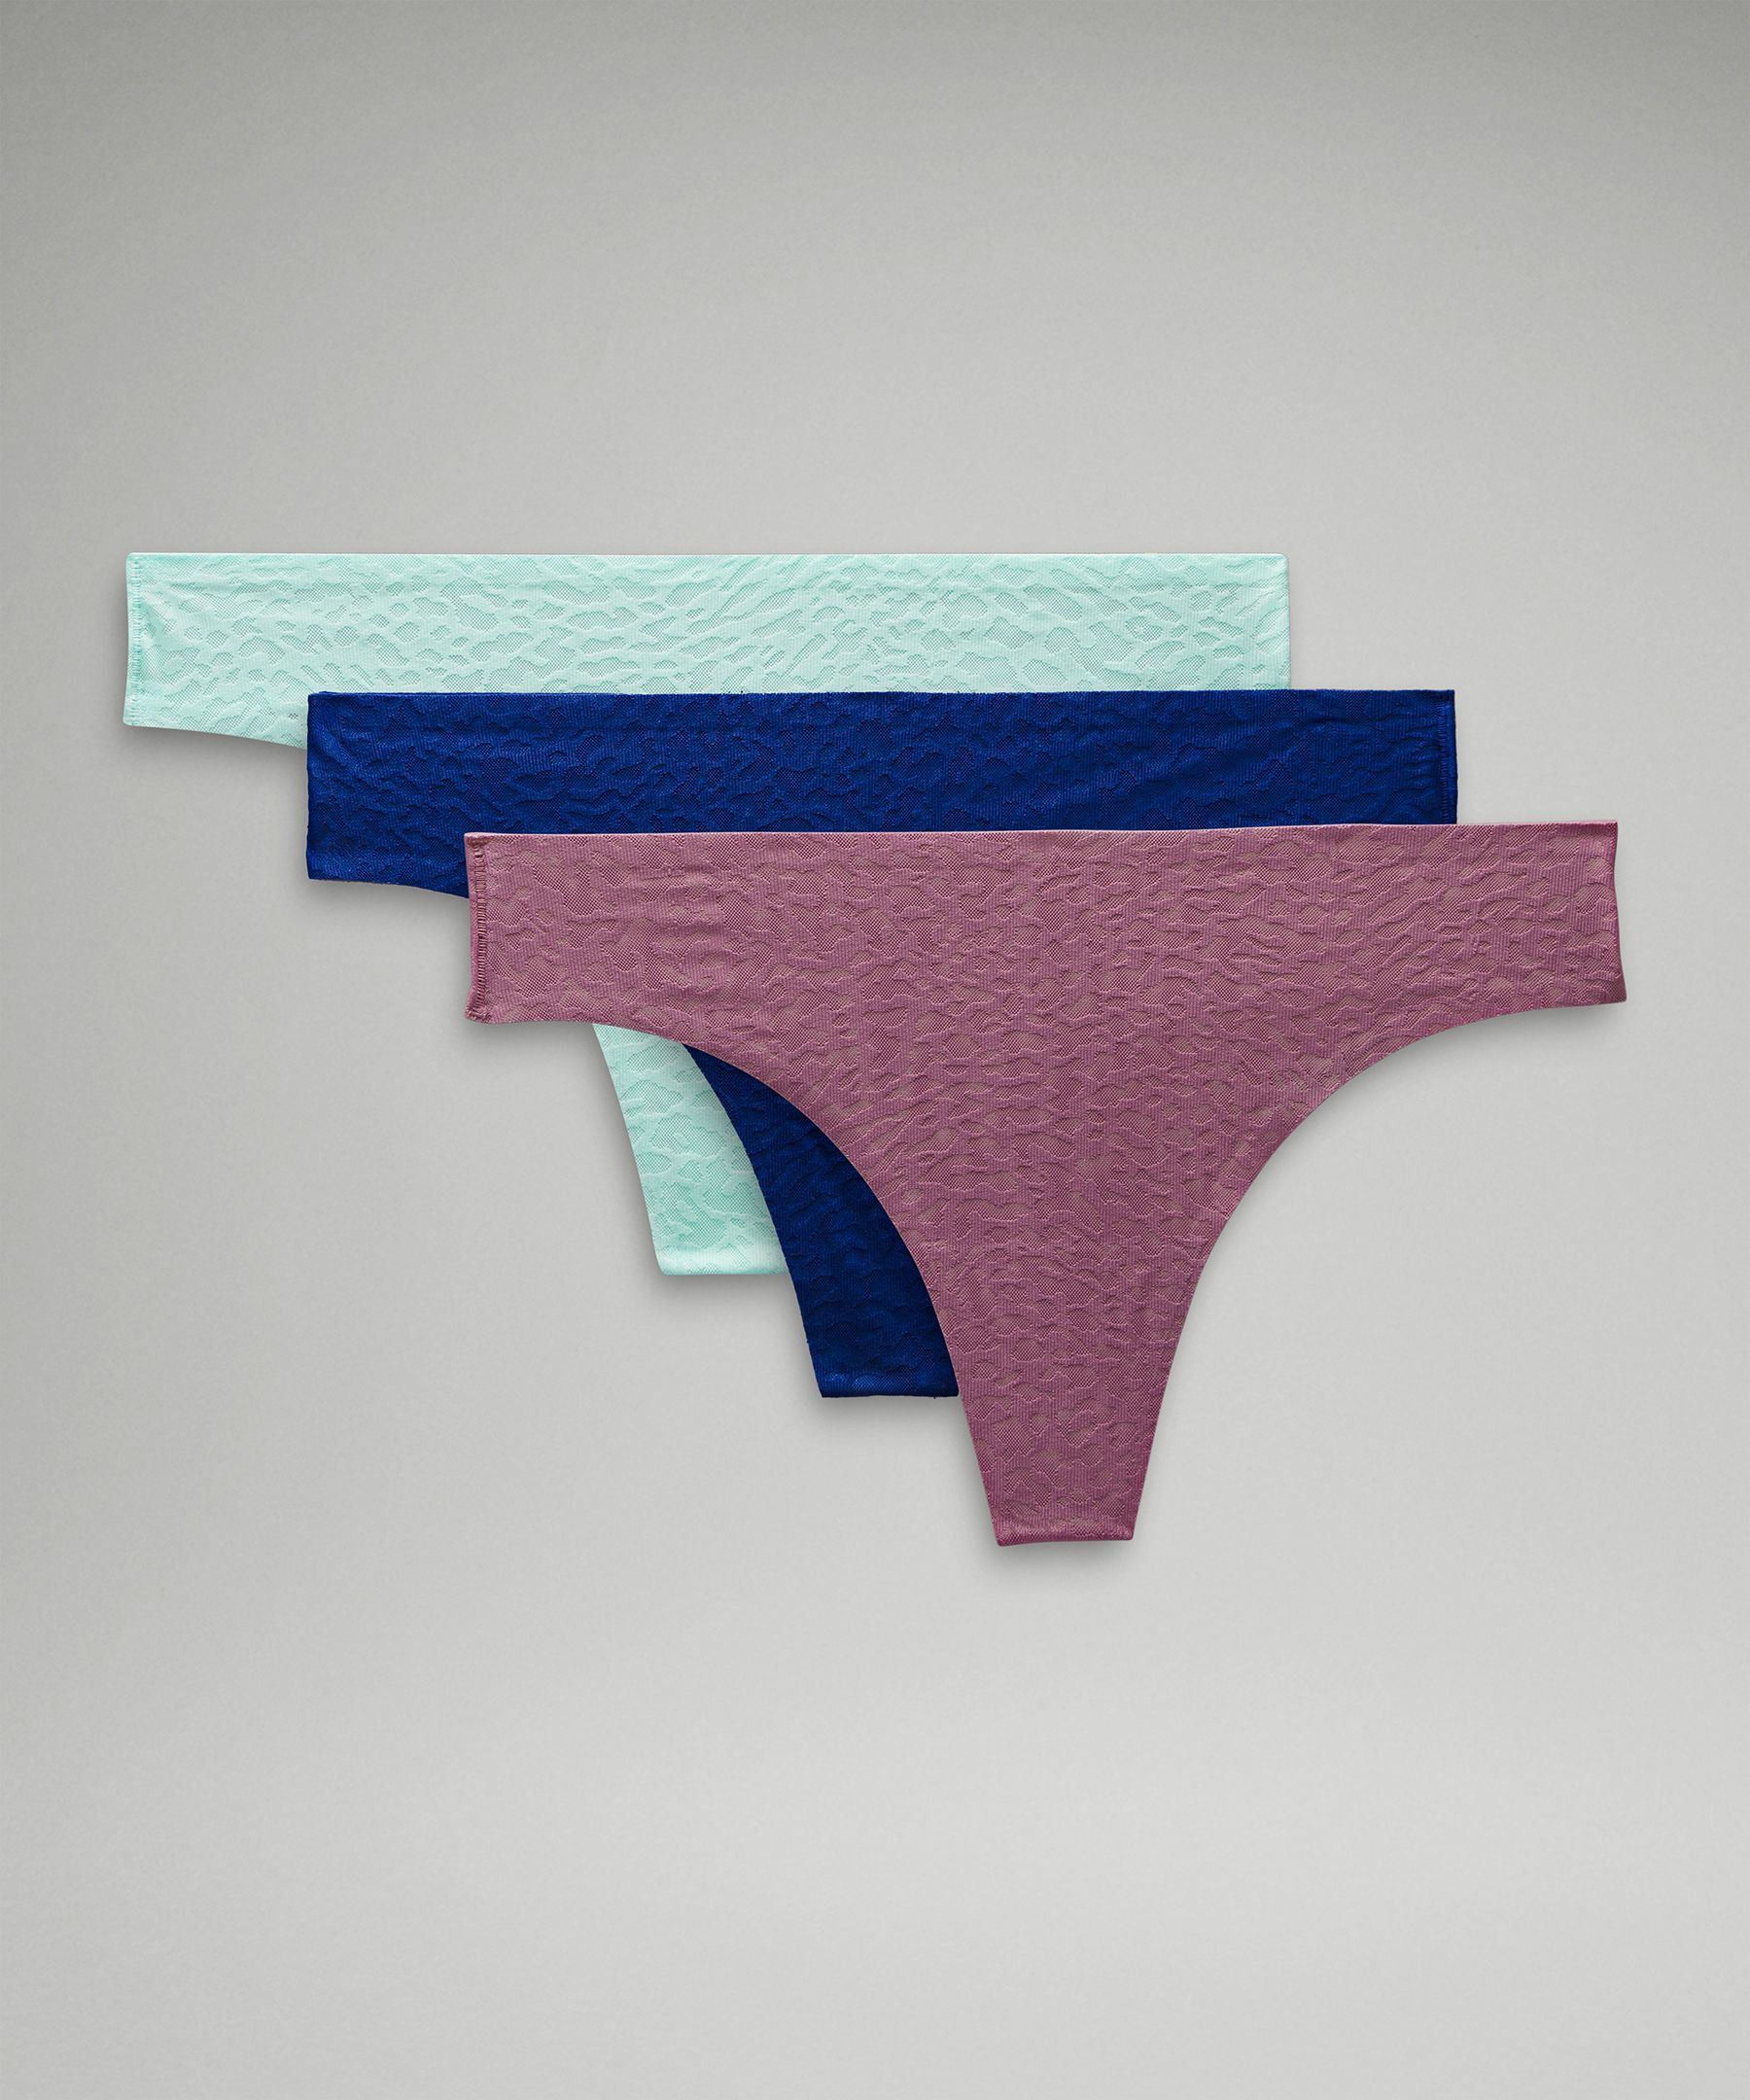 QTBIUQ Women's Lace See-through Thong PantiesTemptation Thongs(Coffee,S) 